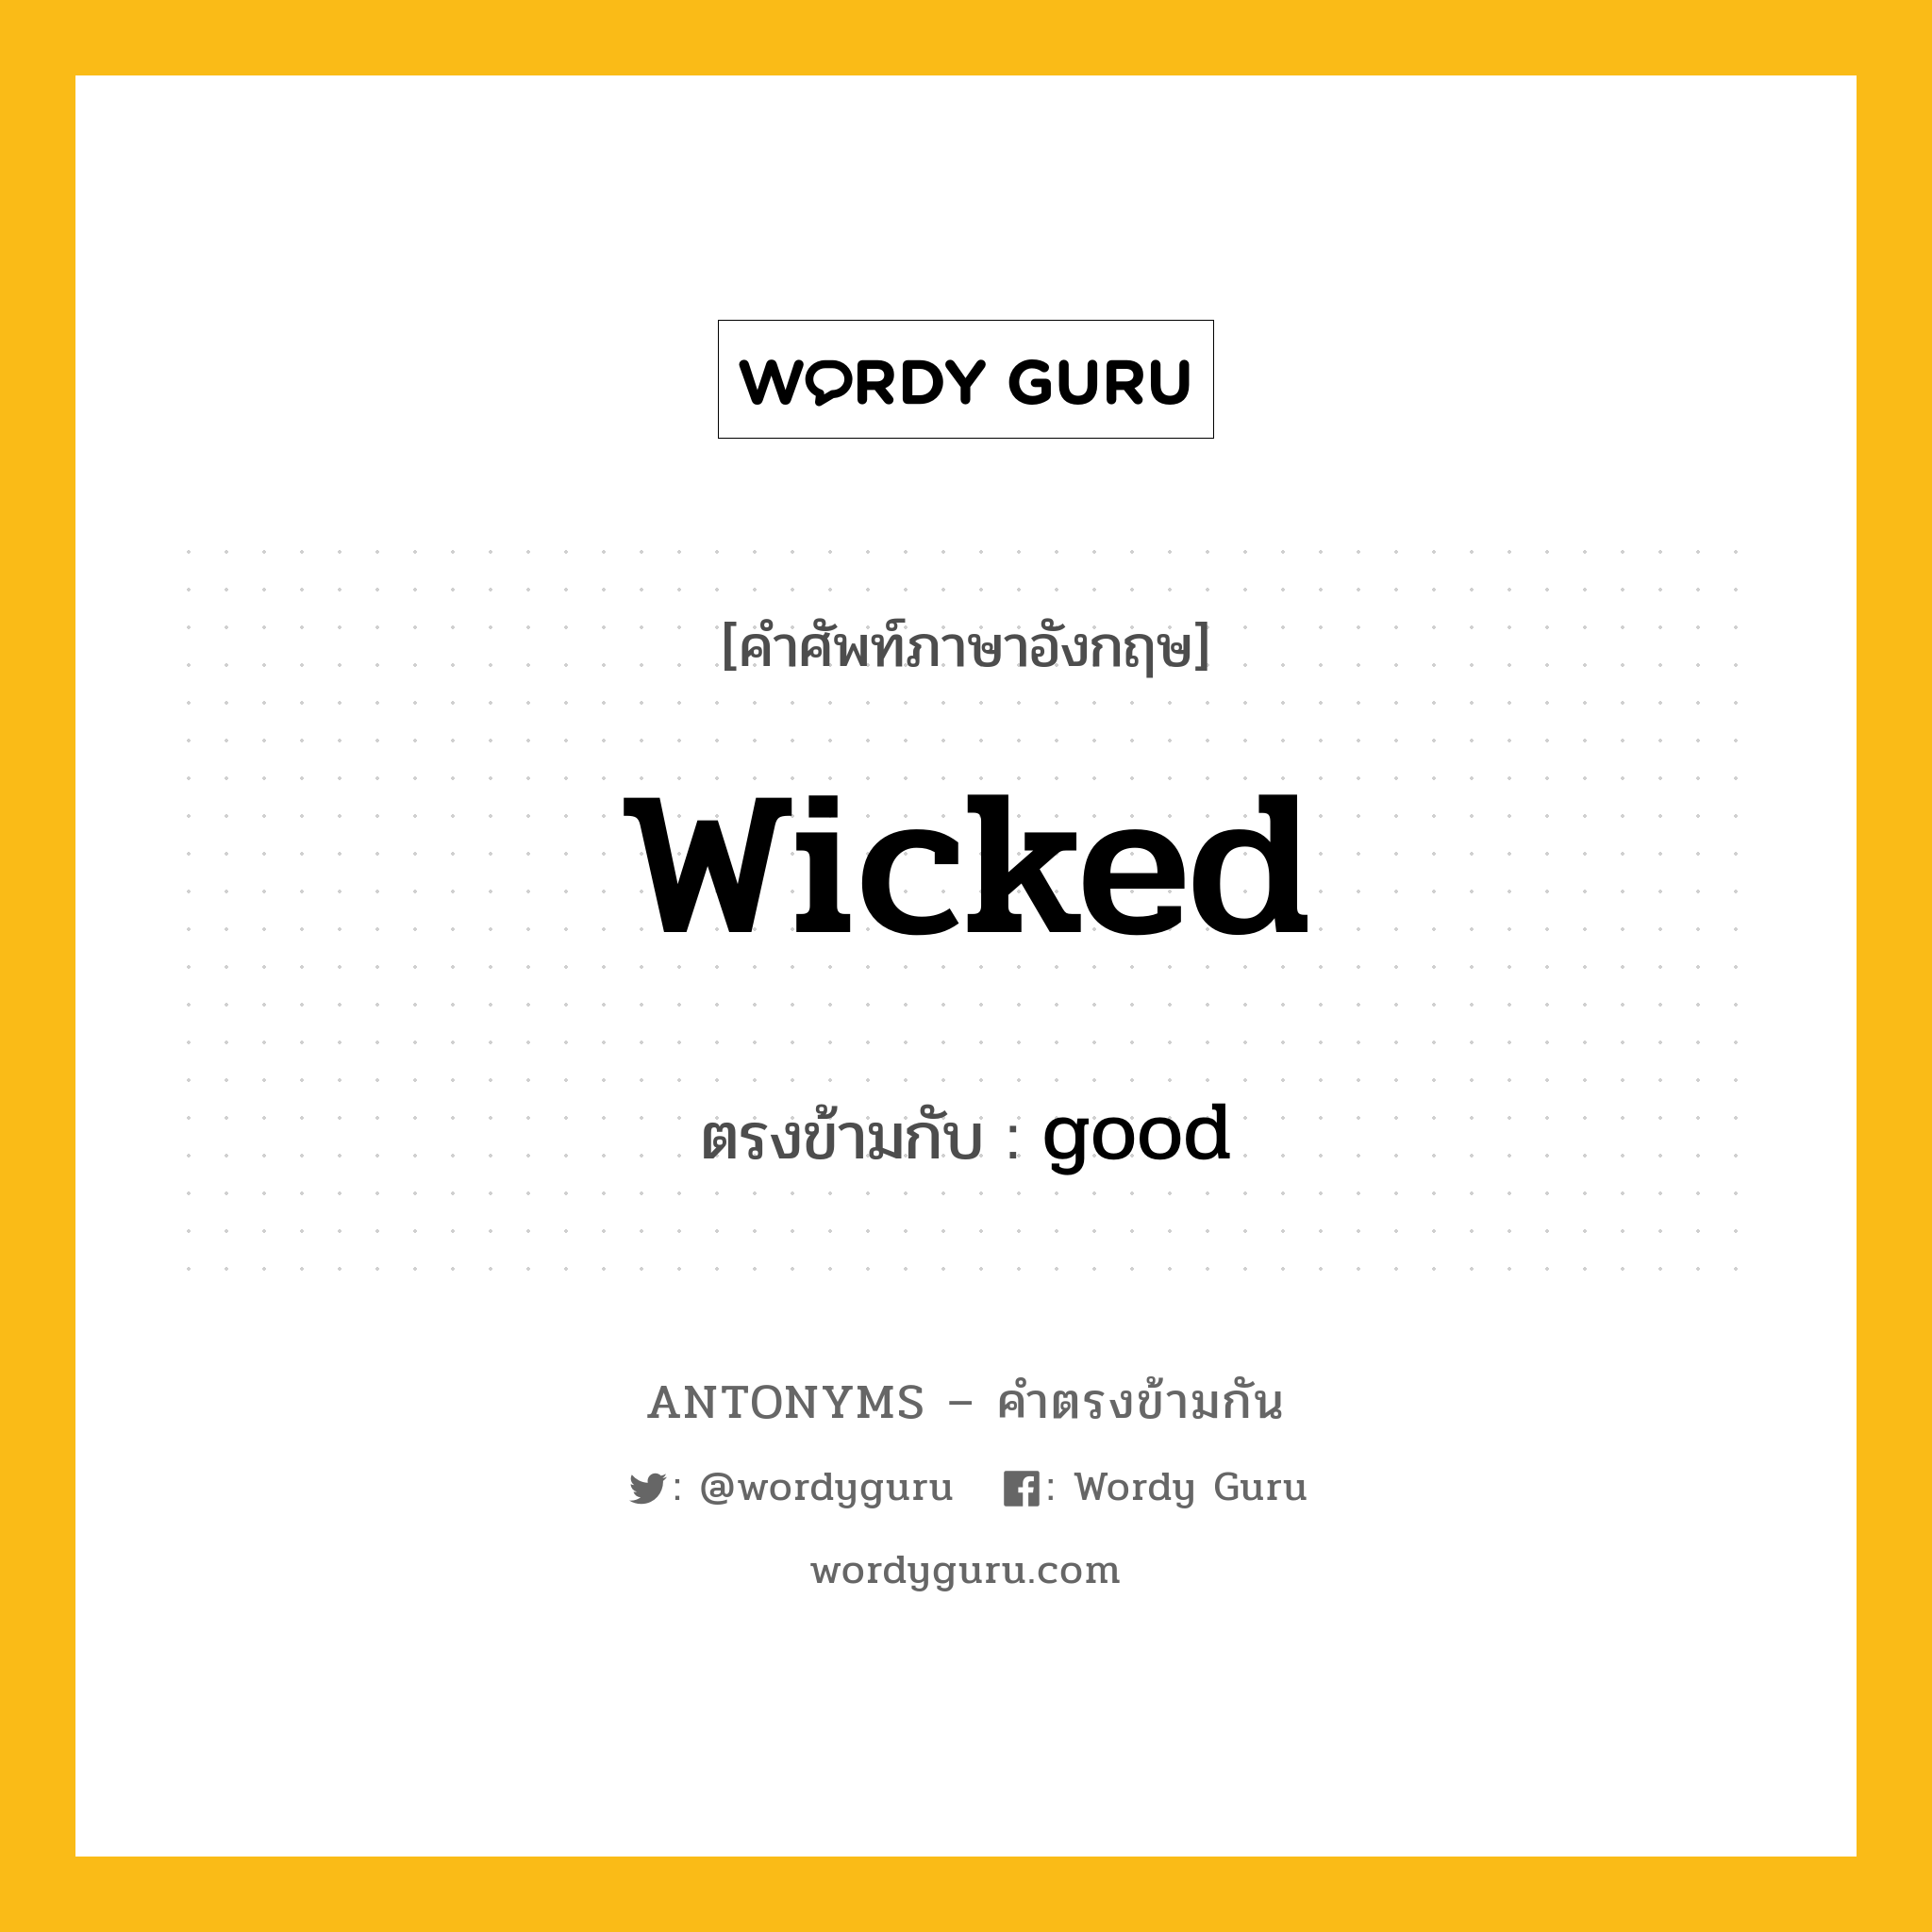 wicked เป็นคำตรงข้ามกับคำไหนบ้าง?, คำศัพท์ภาษาอังกฤษ wicked ตรงข้ามกับ good หมวด good